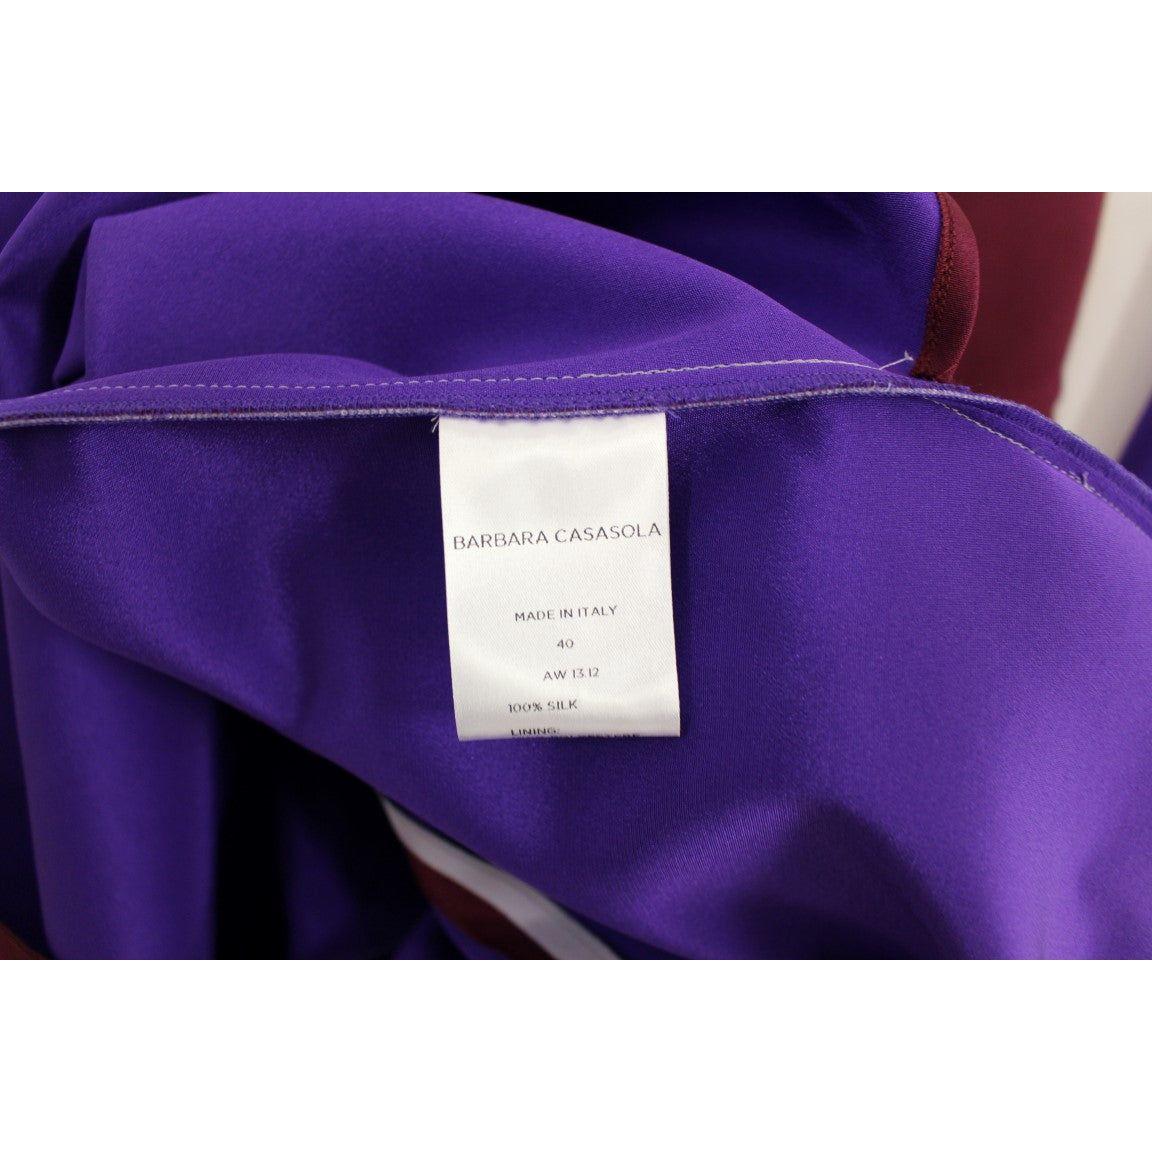 Barbara Casasola Elegant Long Silk Gown in Lavender purple-lavender-gown-maxi-silk-long-dress-1 219588-purple-lavender-gown-maxi-silk-long-dress-3-6.jpg